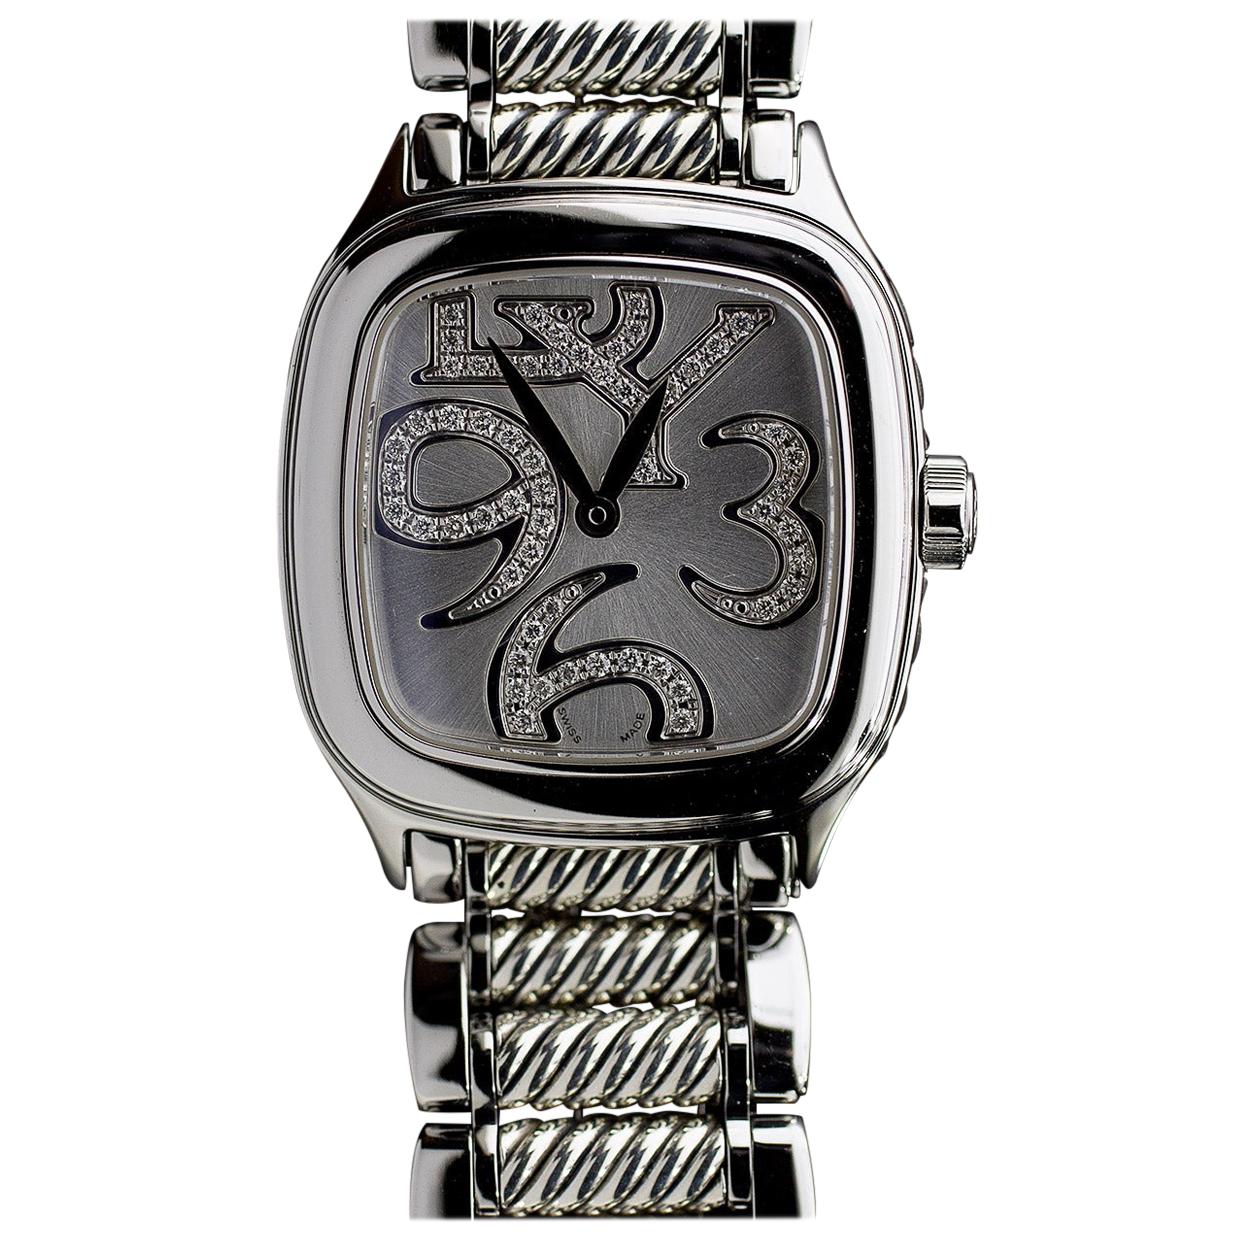 David Yurman Thoroughbred Stainless Steel Watch T304-XS